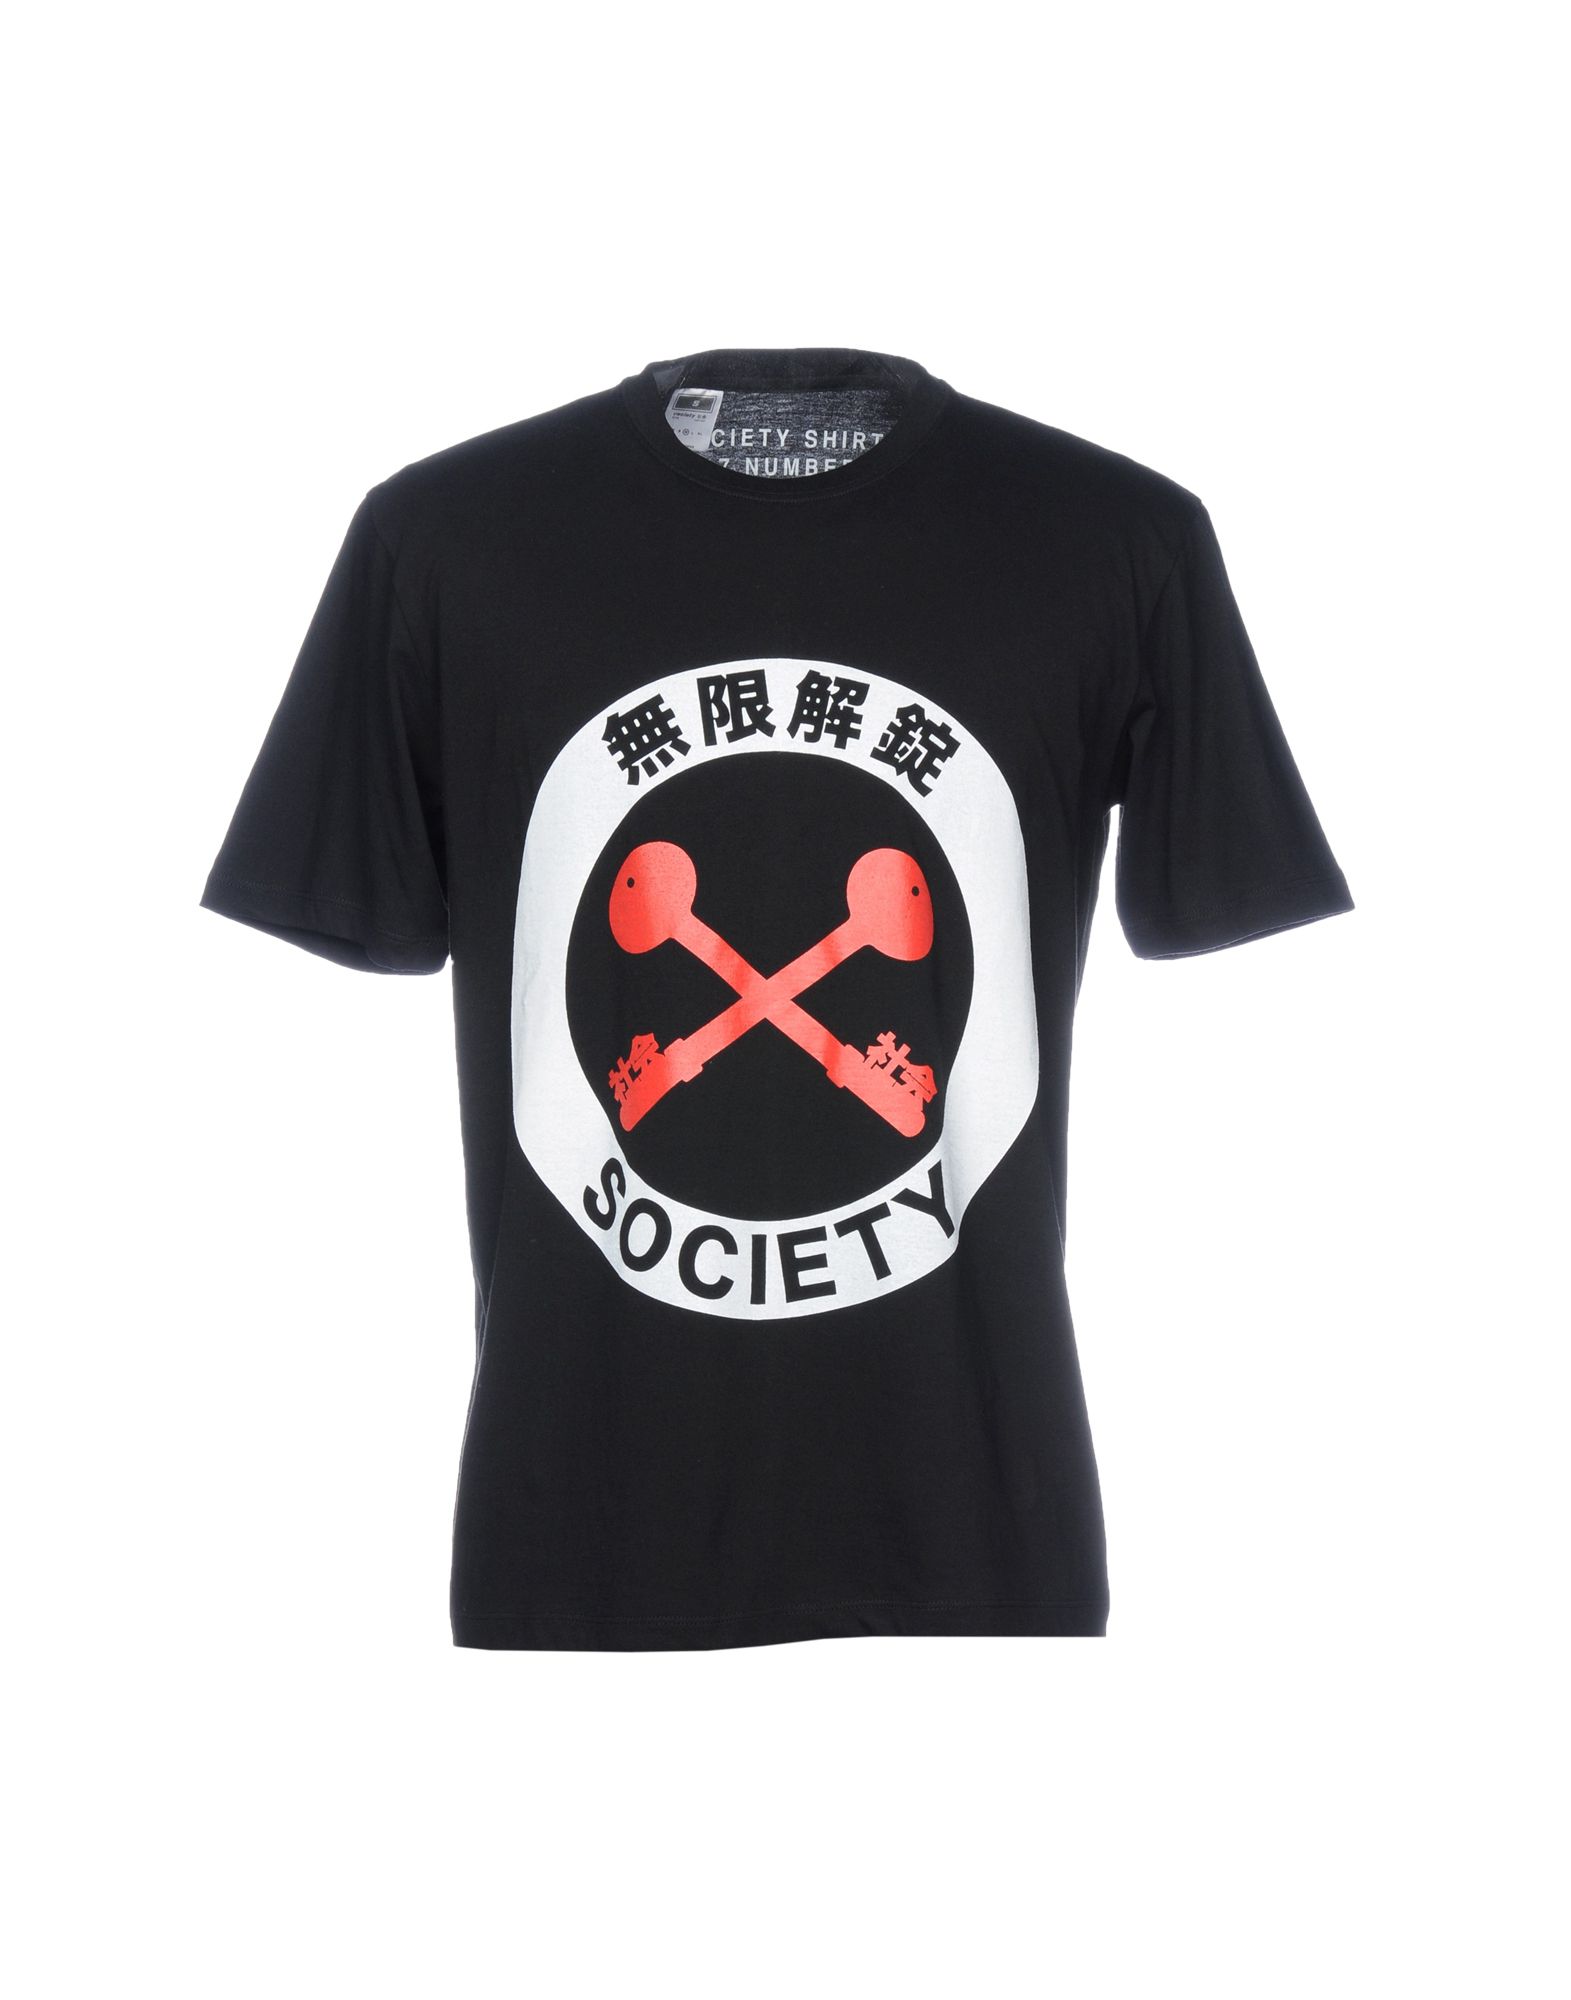 Society купить. Pothead Society футболка. Kaotiko Society футболка. Manto peaceful violence Society футболка. BPS одежда.